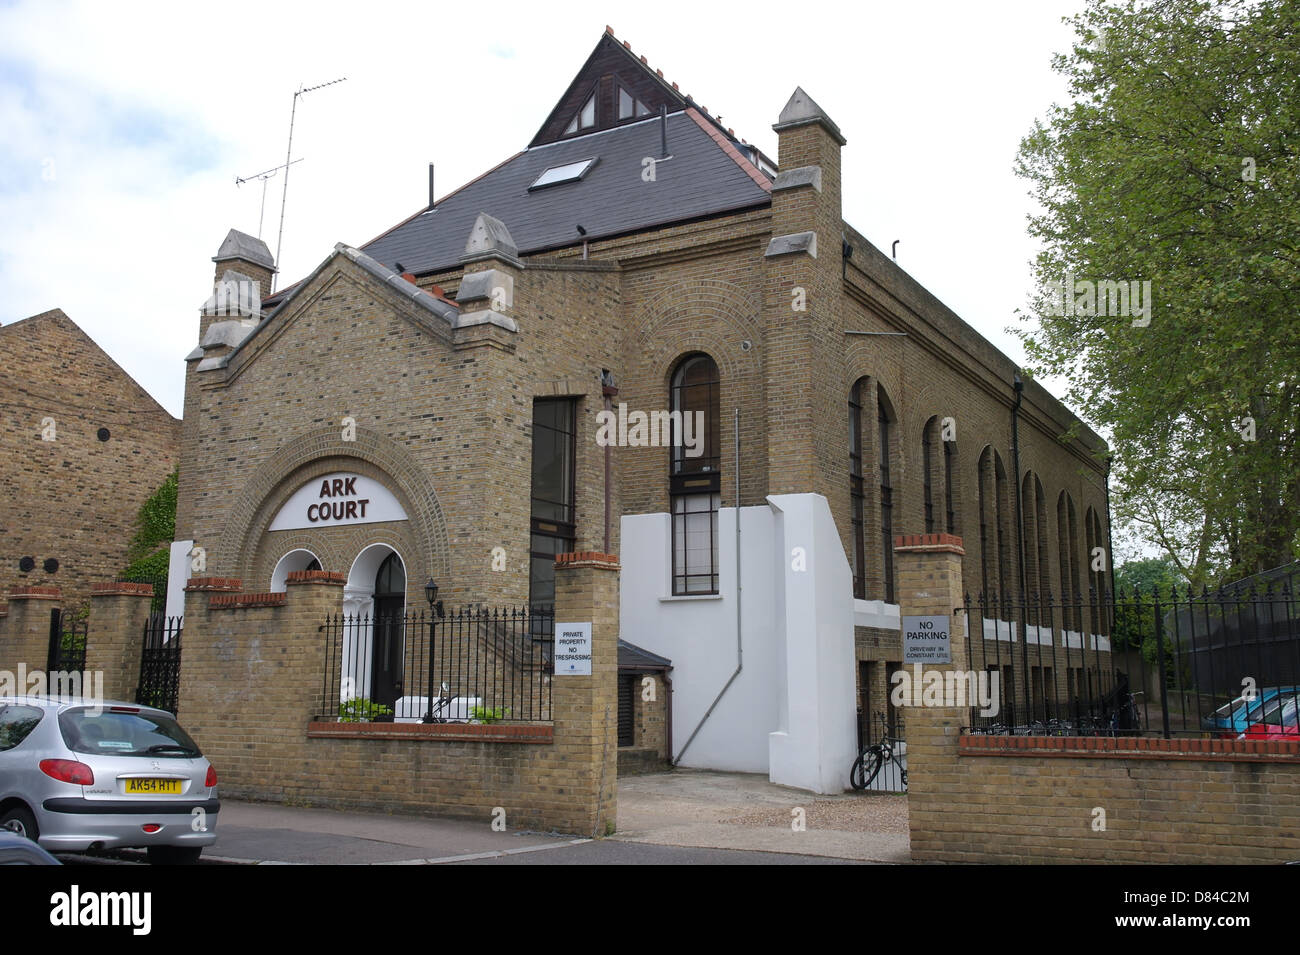 ark court alkham road london church to house flat Stock Photo